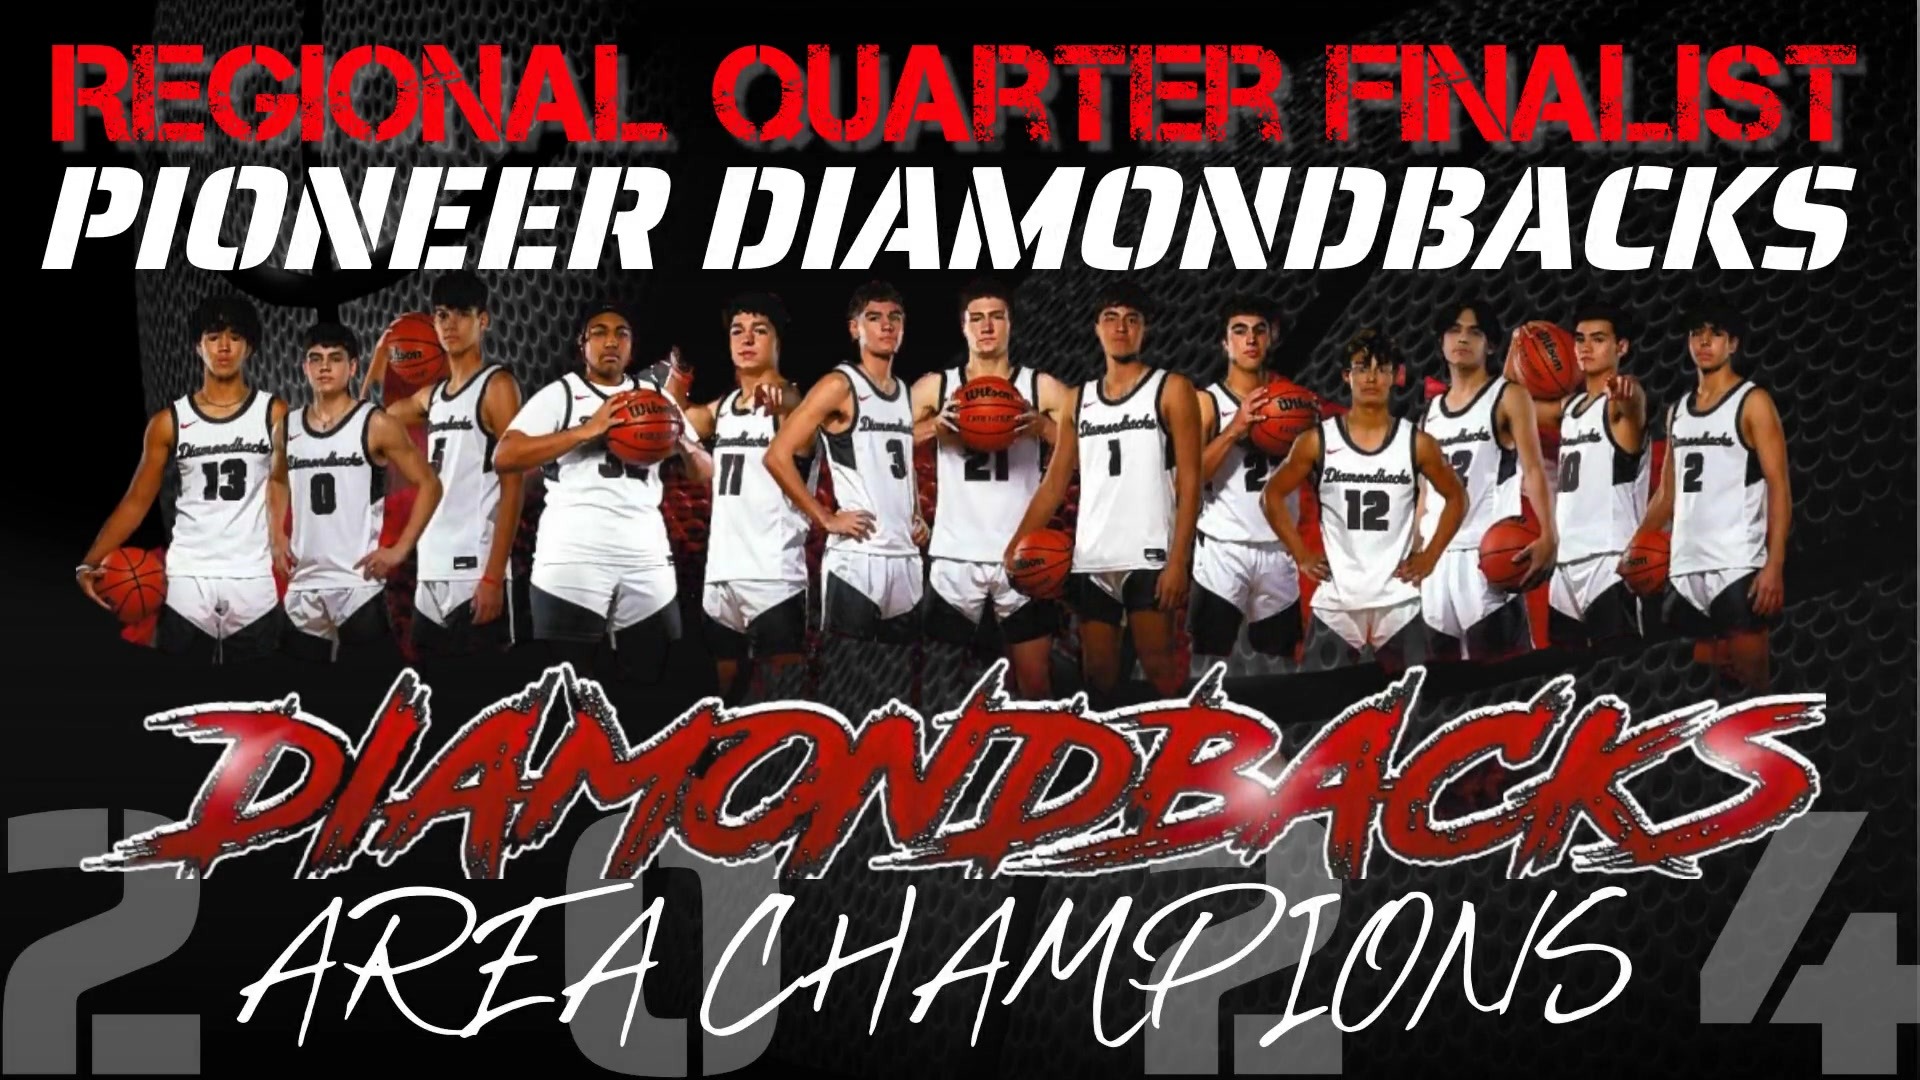 Slide 8 - Pioneer Diamondbacks Regional Quarter Finalist!